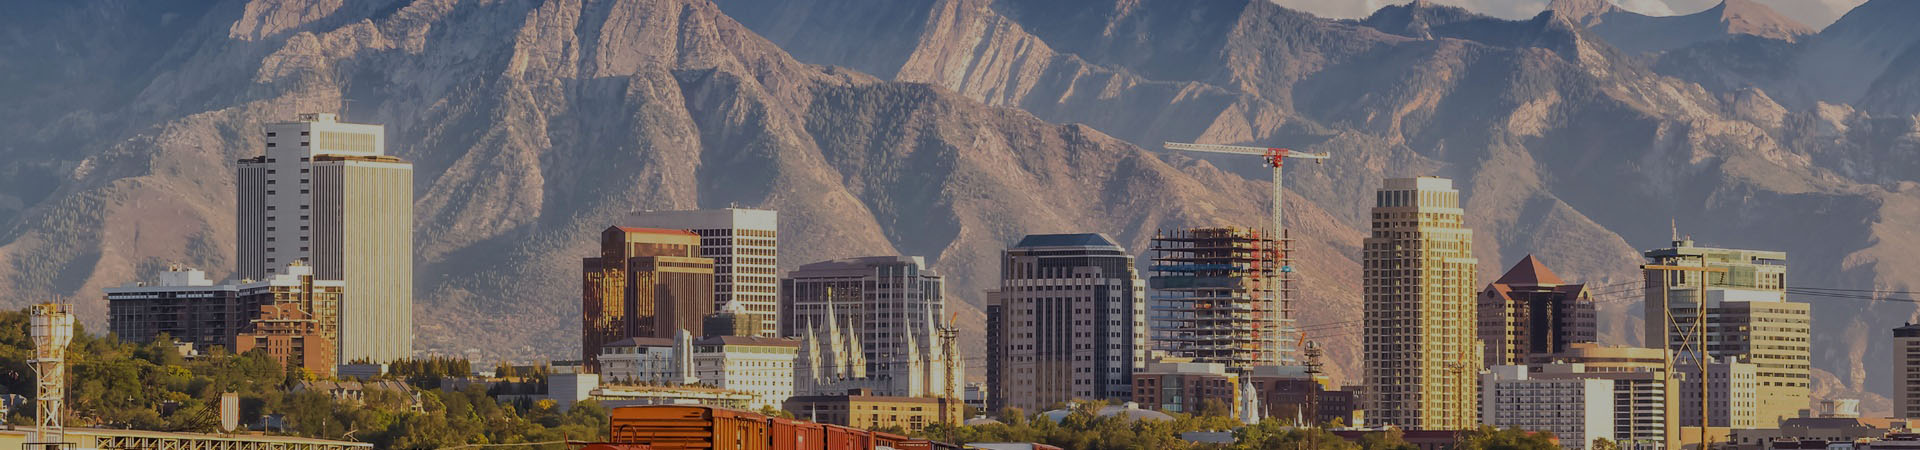 Jobs in Salt Lake City